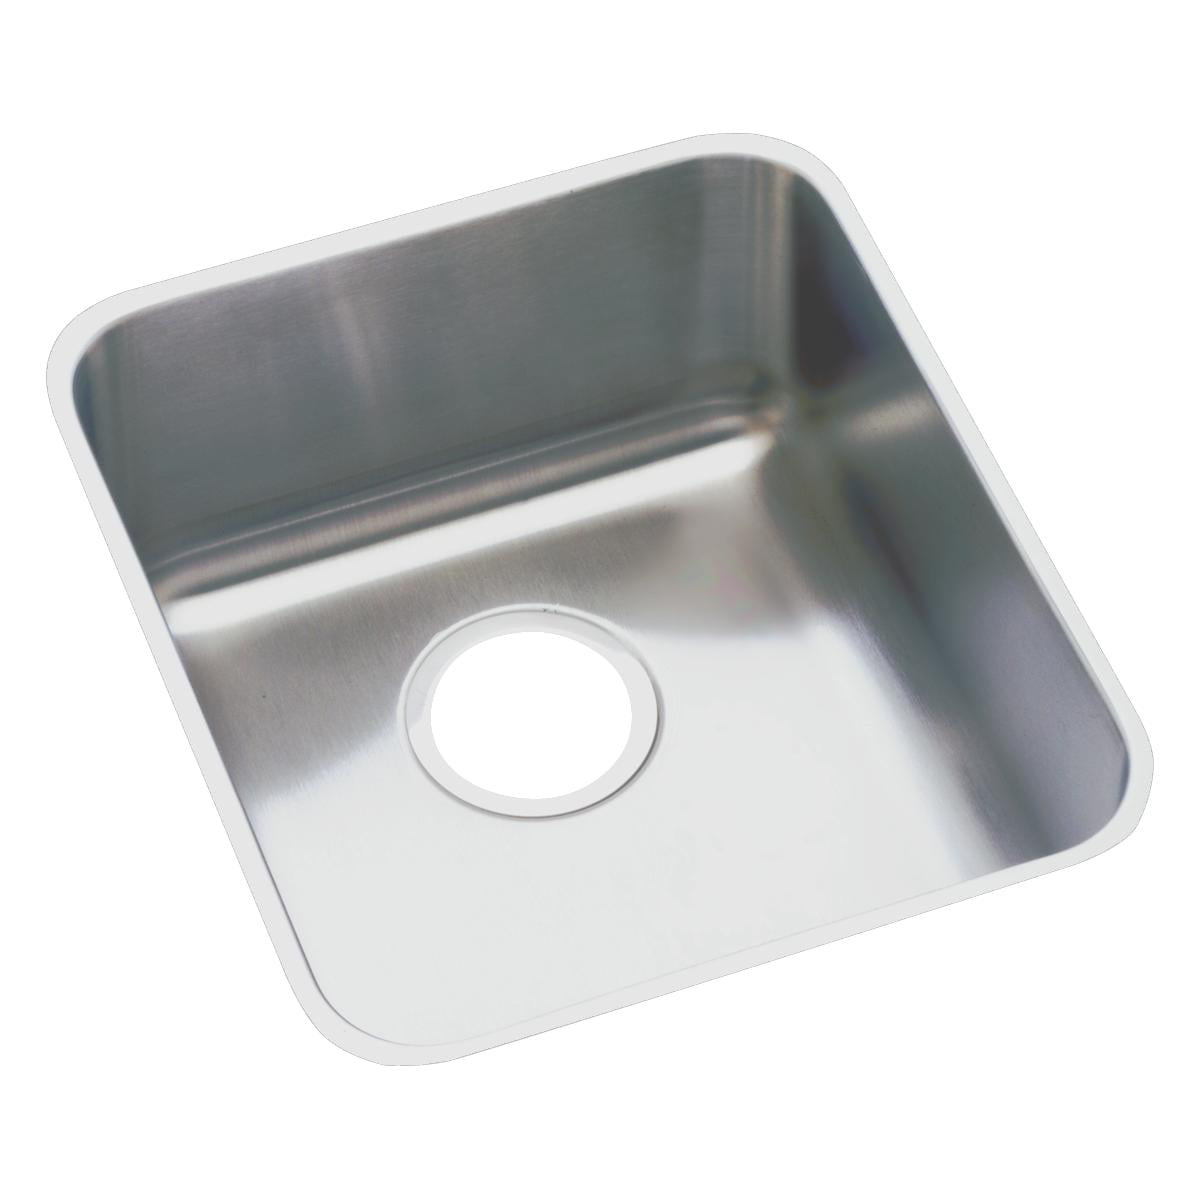 Elkay DXUH2816 Dayton Single Bowl Undermount Stainless Steel Sink for sale online 